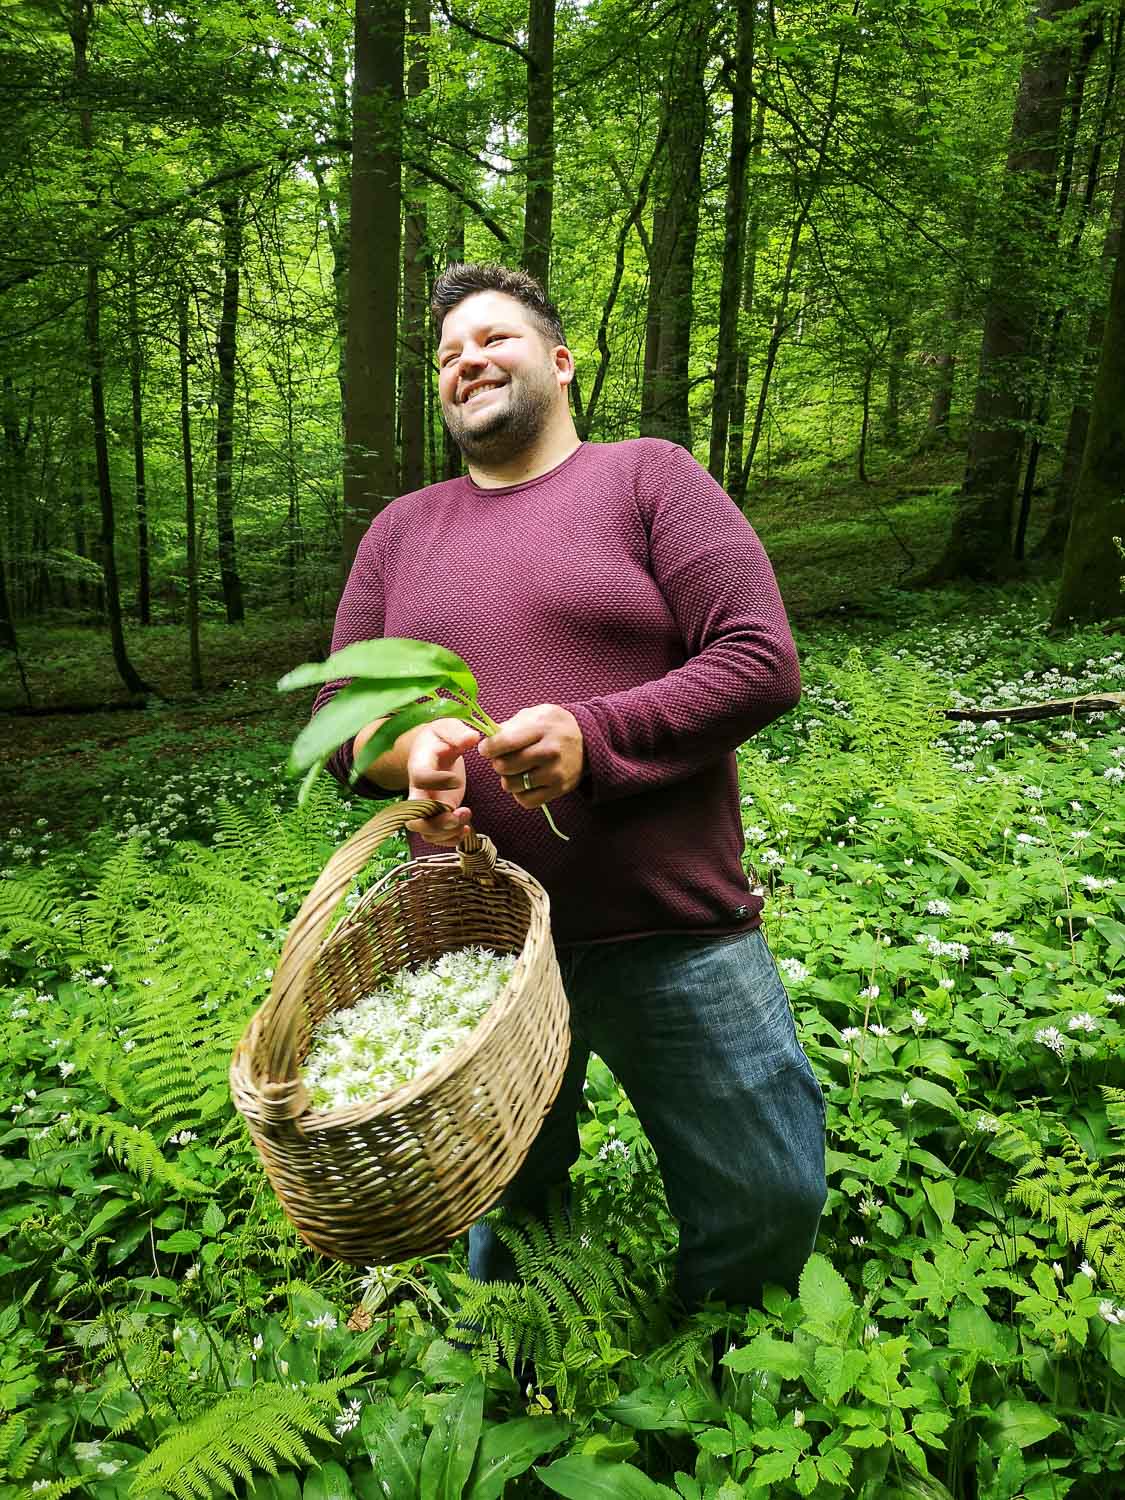 Luka Kosir foraging, Slovenian chef in Michelin star restaurant Gric near Ljubljana